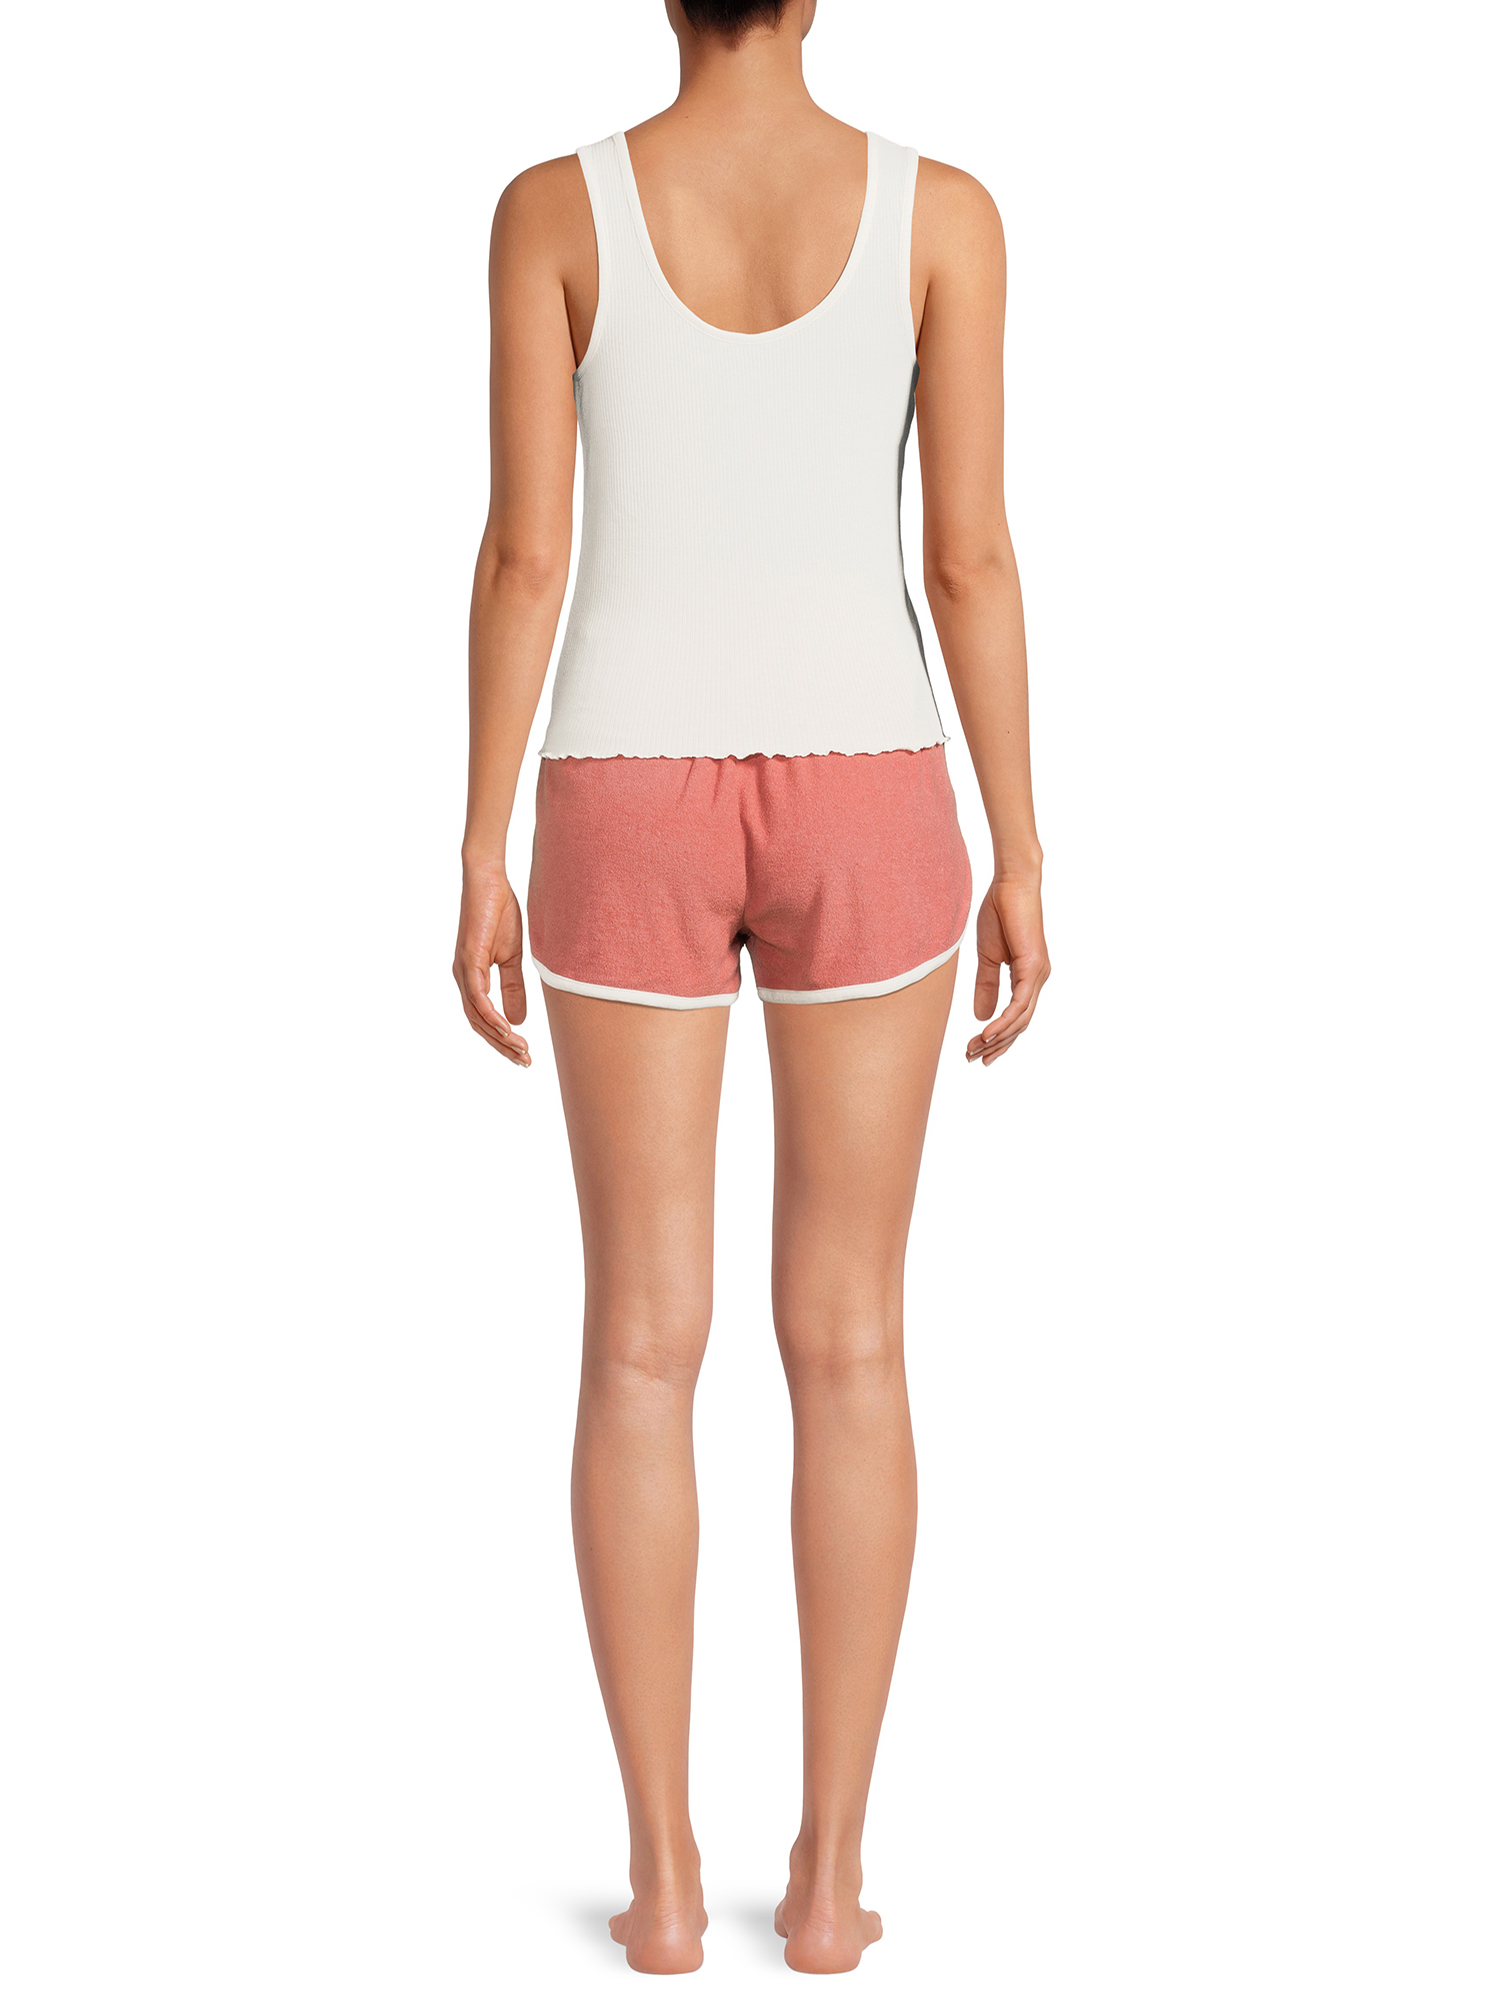 Selena Women's Ribbed Tank Top and Shorts Sleep Set, 2-Piece - image 3 of 5